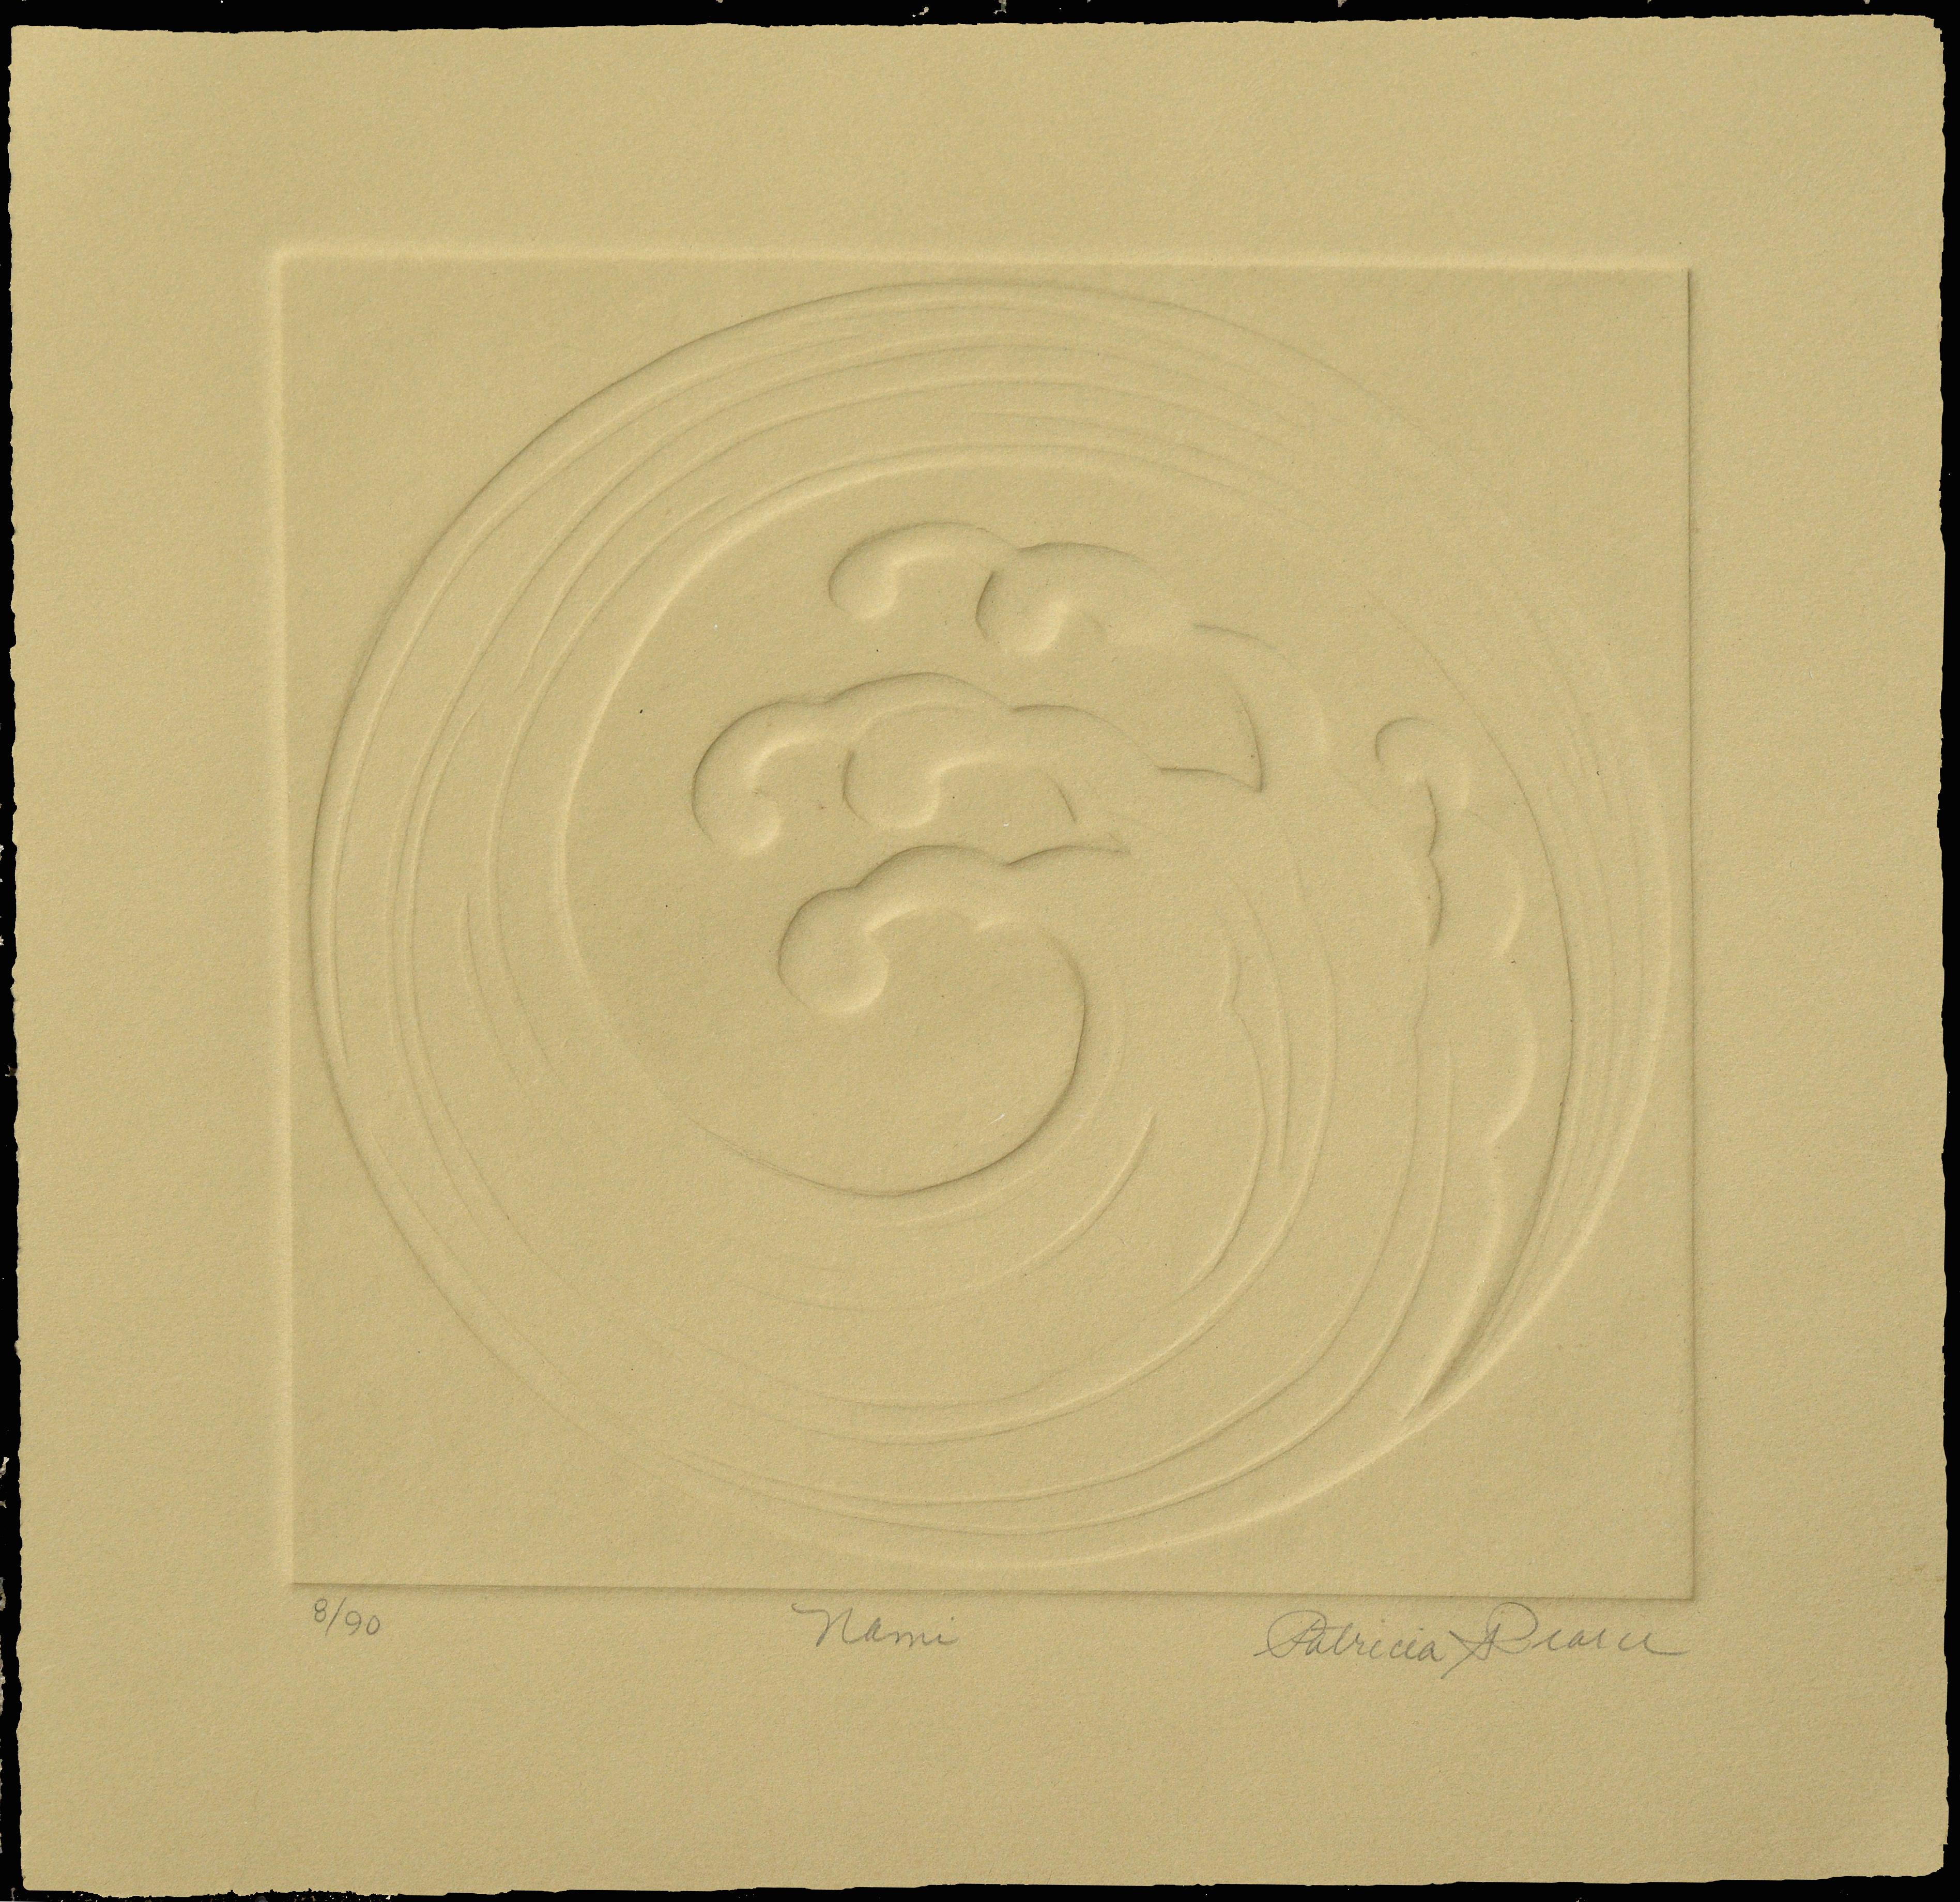 Patricia A Pearce Abstract Print – "Nami" Lithograph